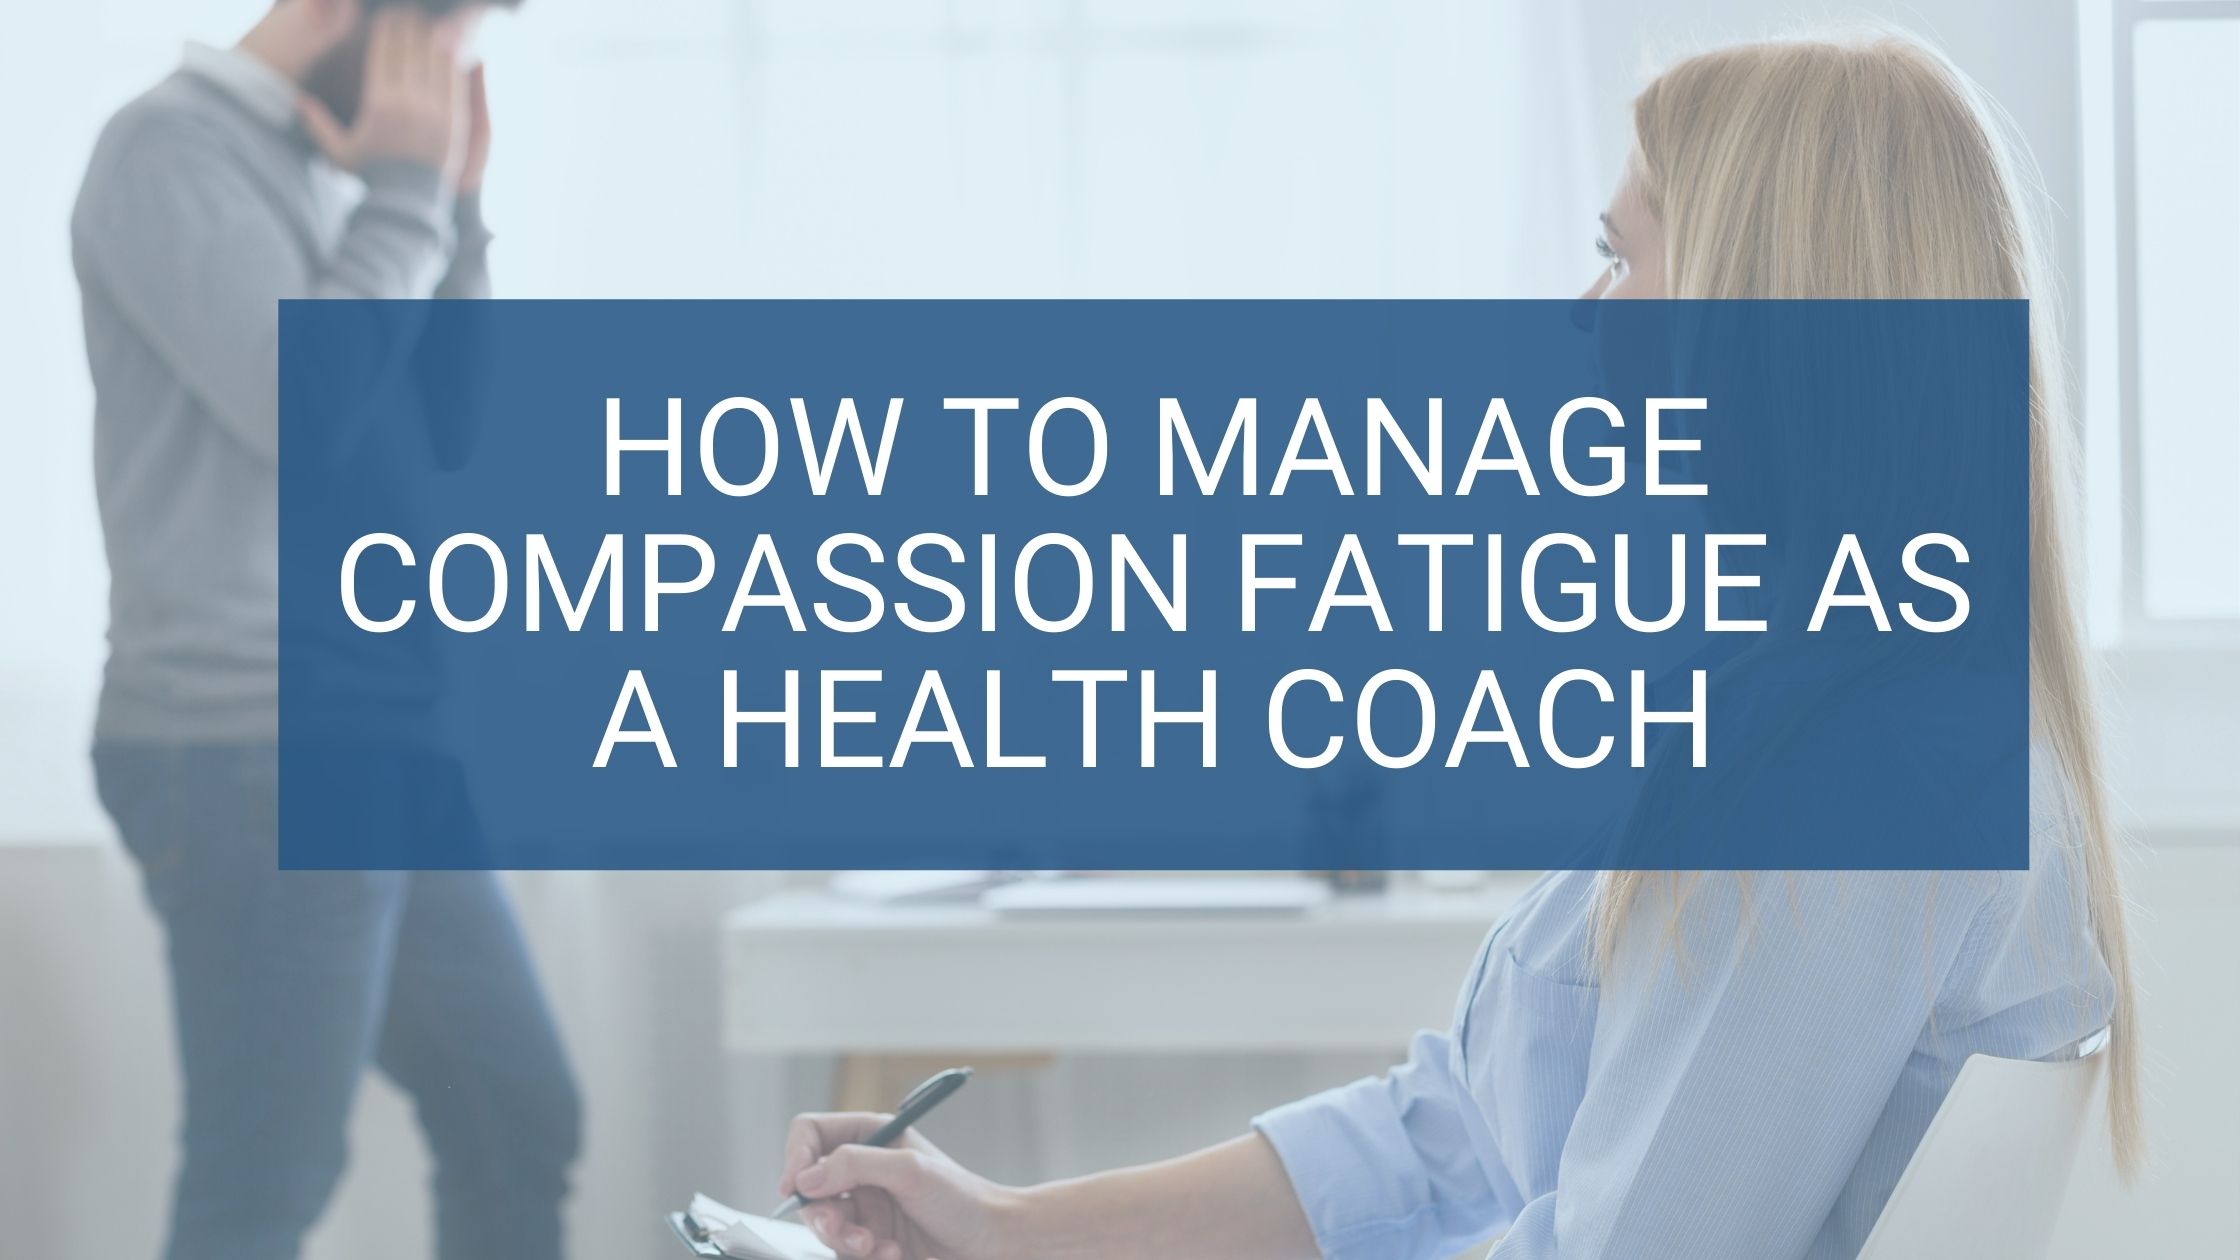 How to manage compassion fatigue as a health coach